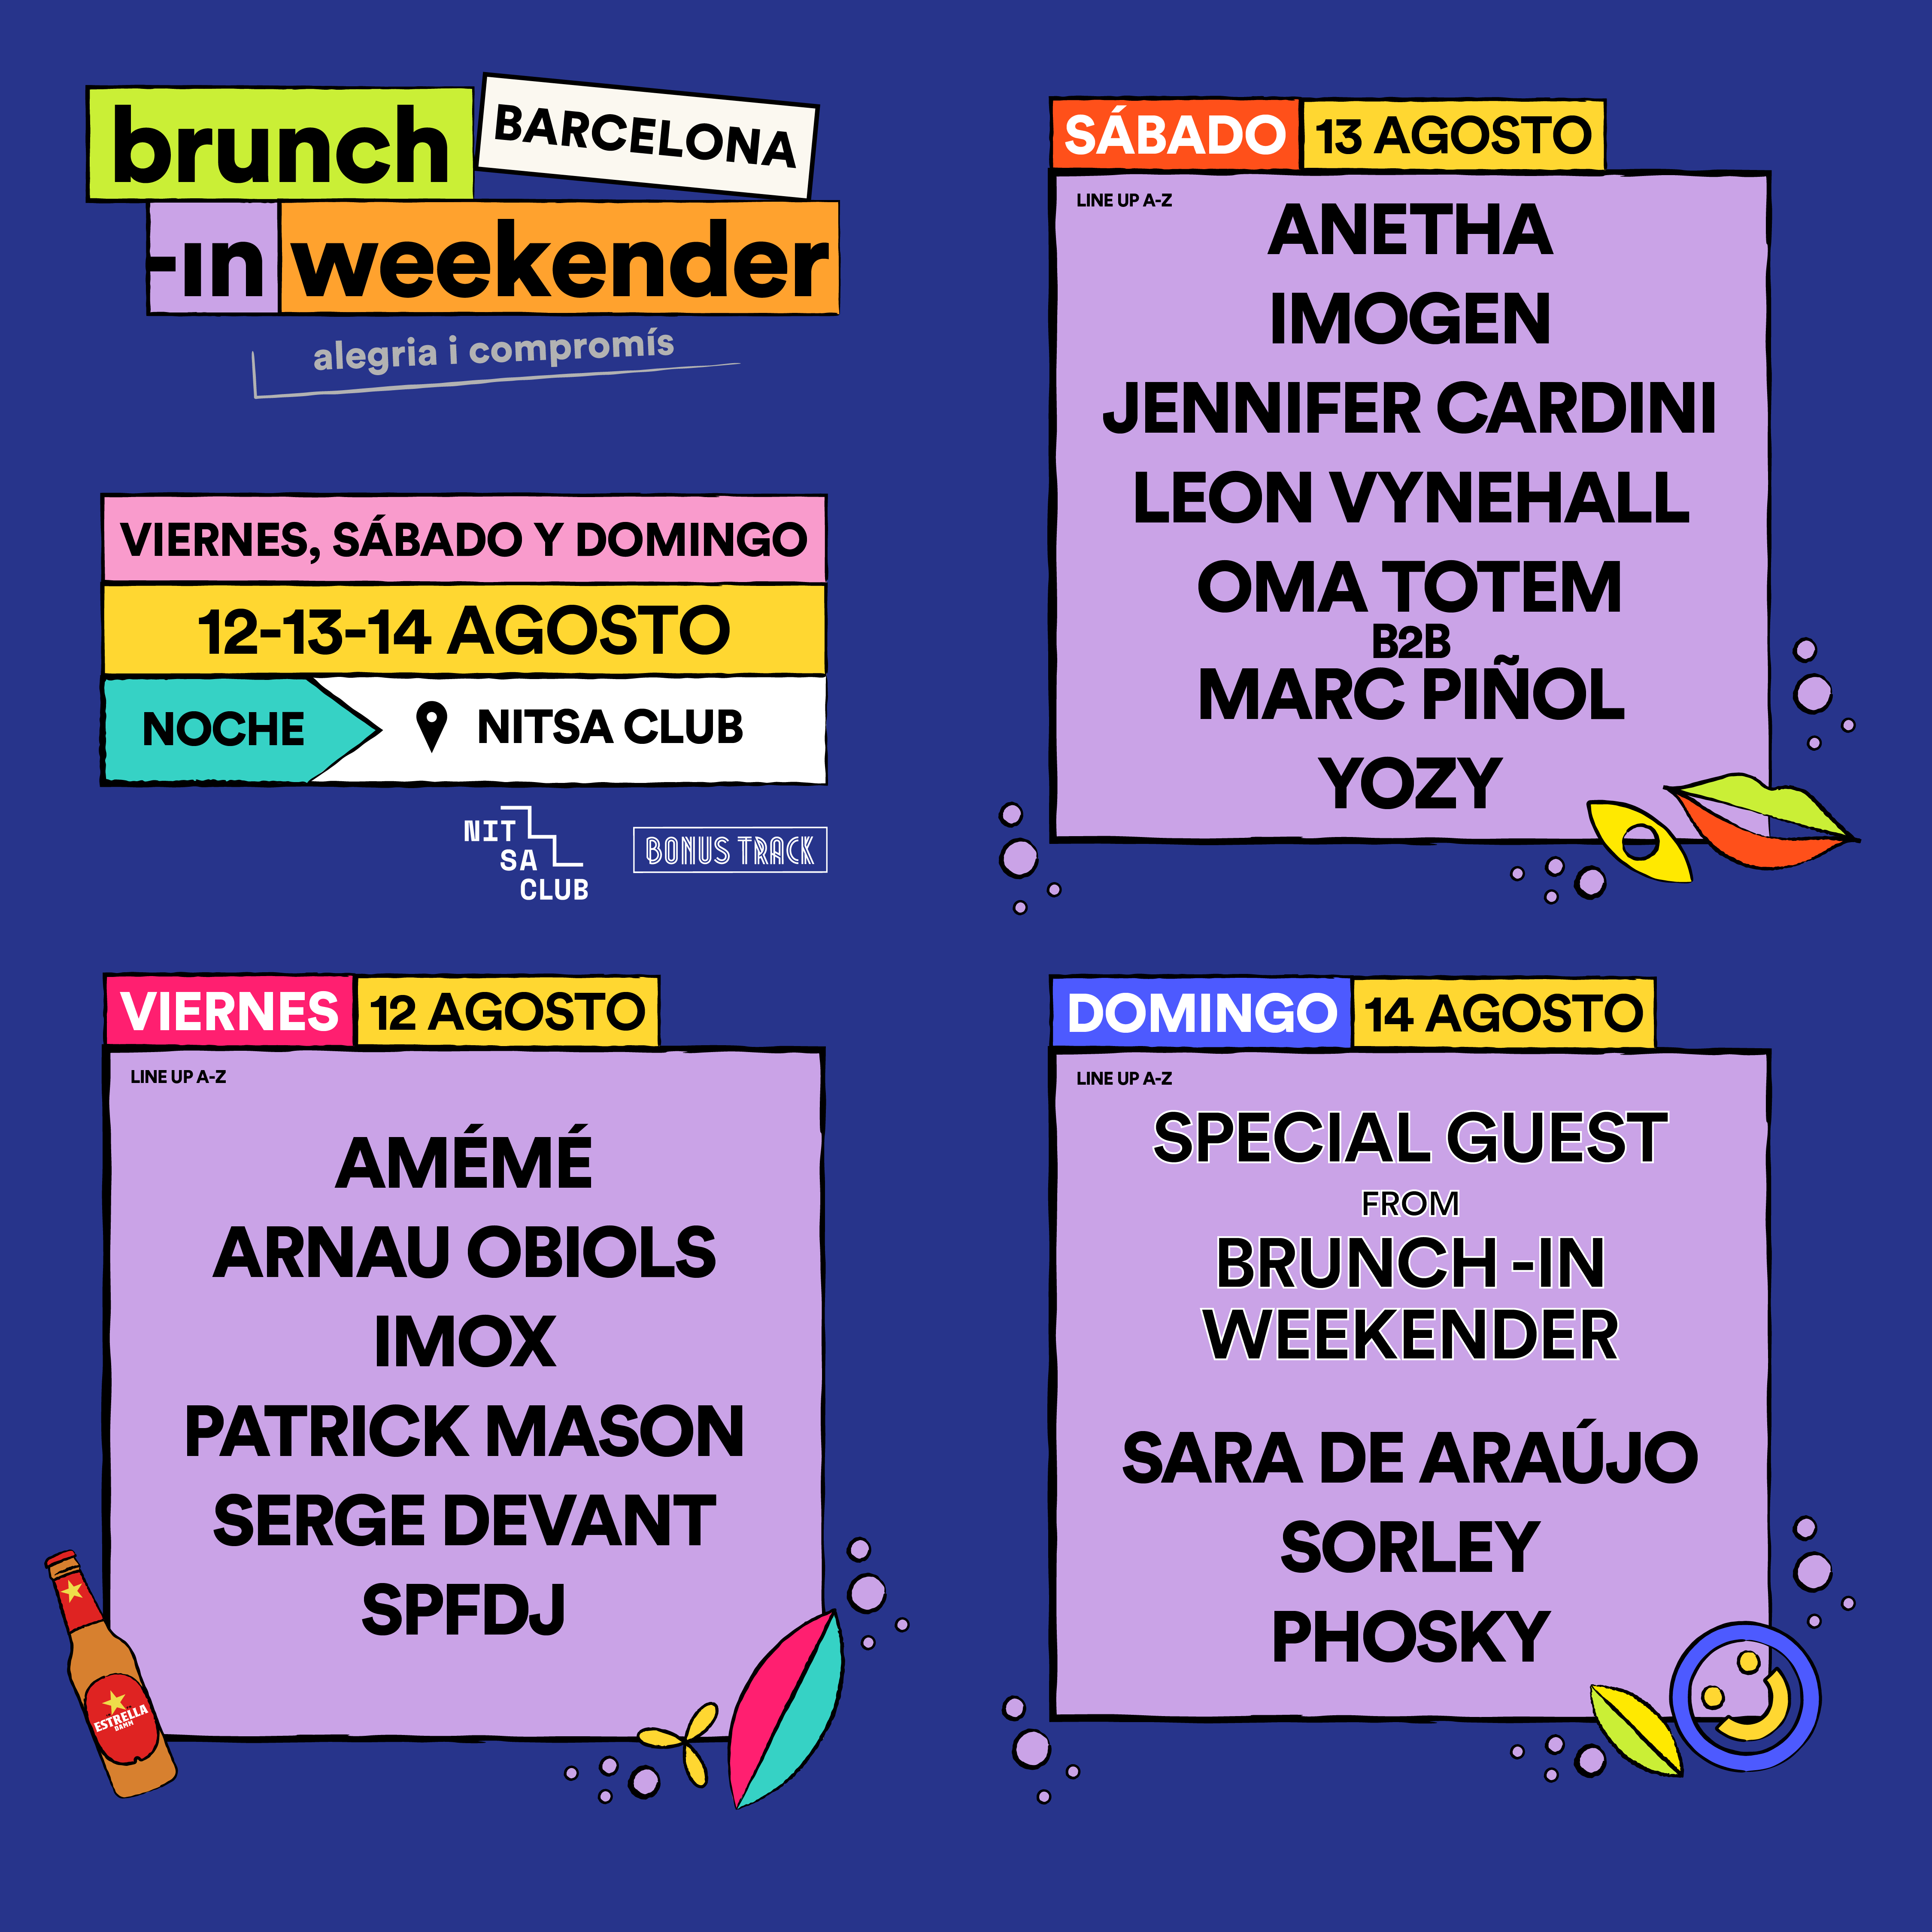 Brunch -In Weekender FRIDAY 12 nightime: Amemé, Arnau Obiols, Imox, Patrick Mason, SPFDJ - Página trasera